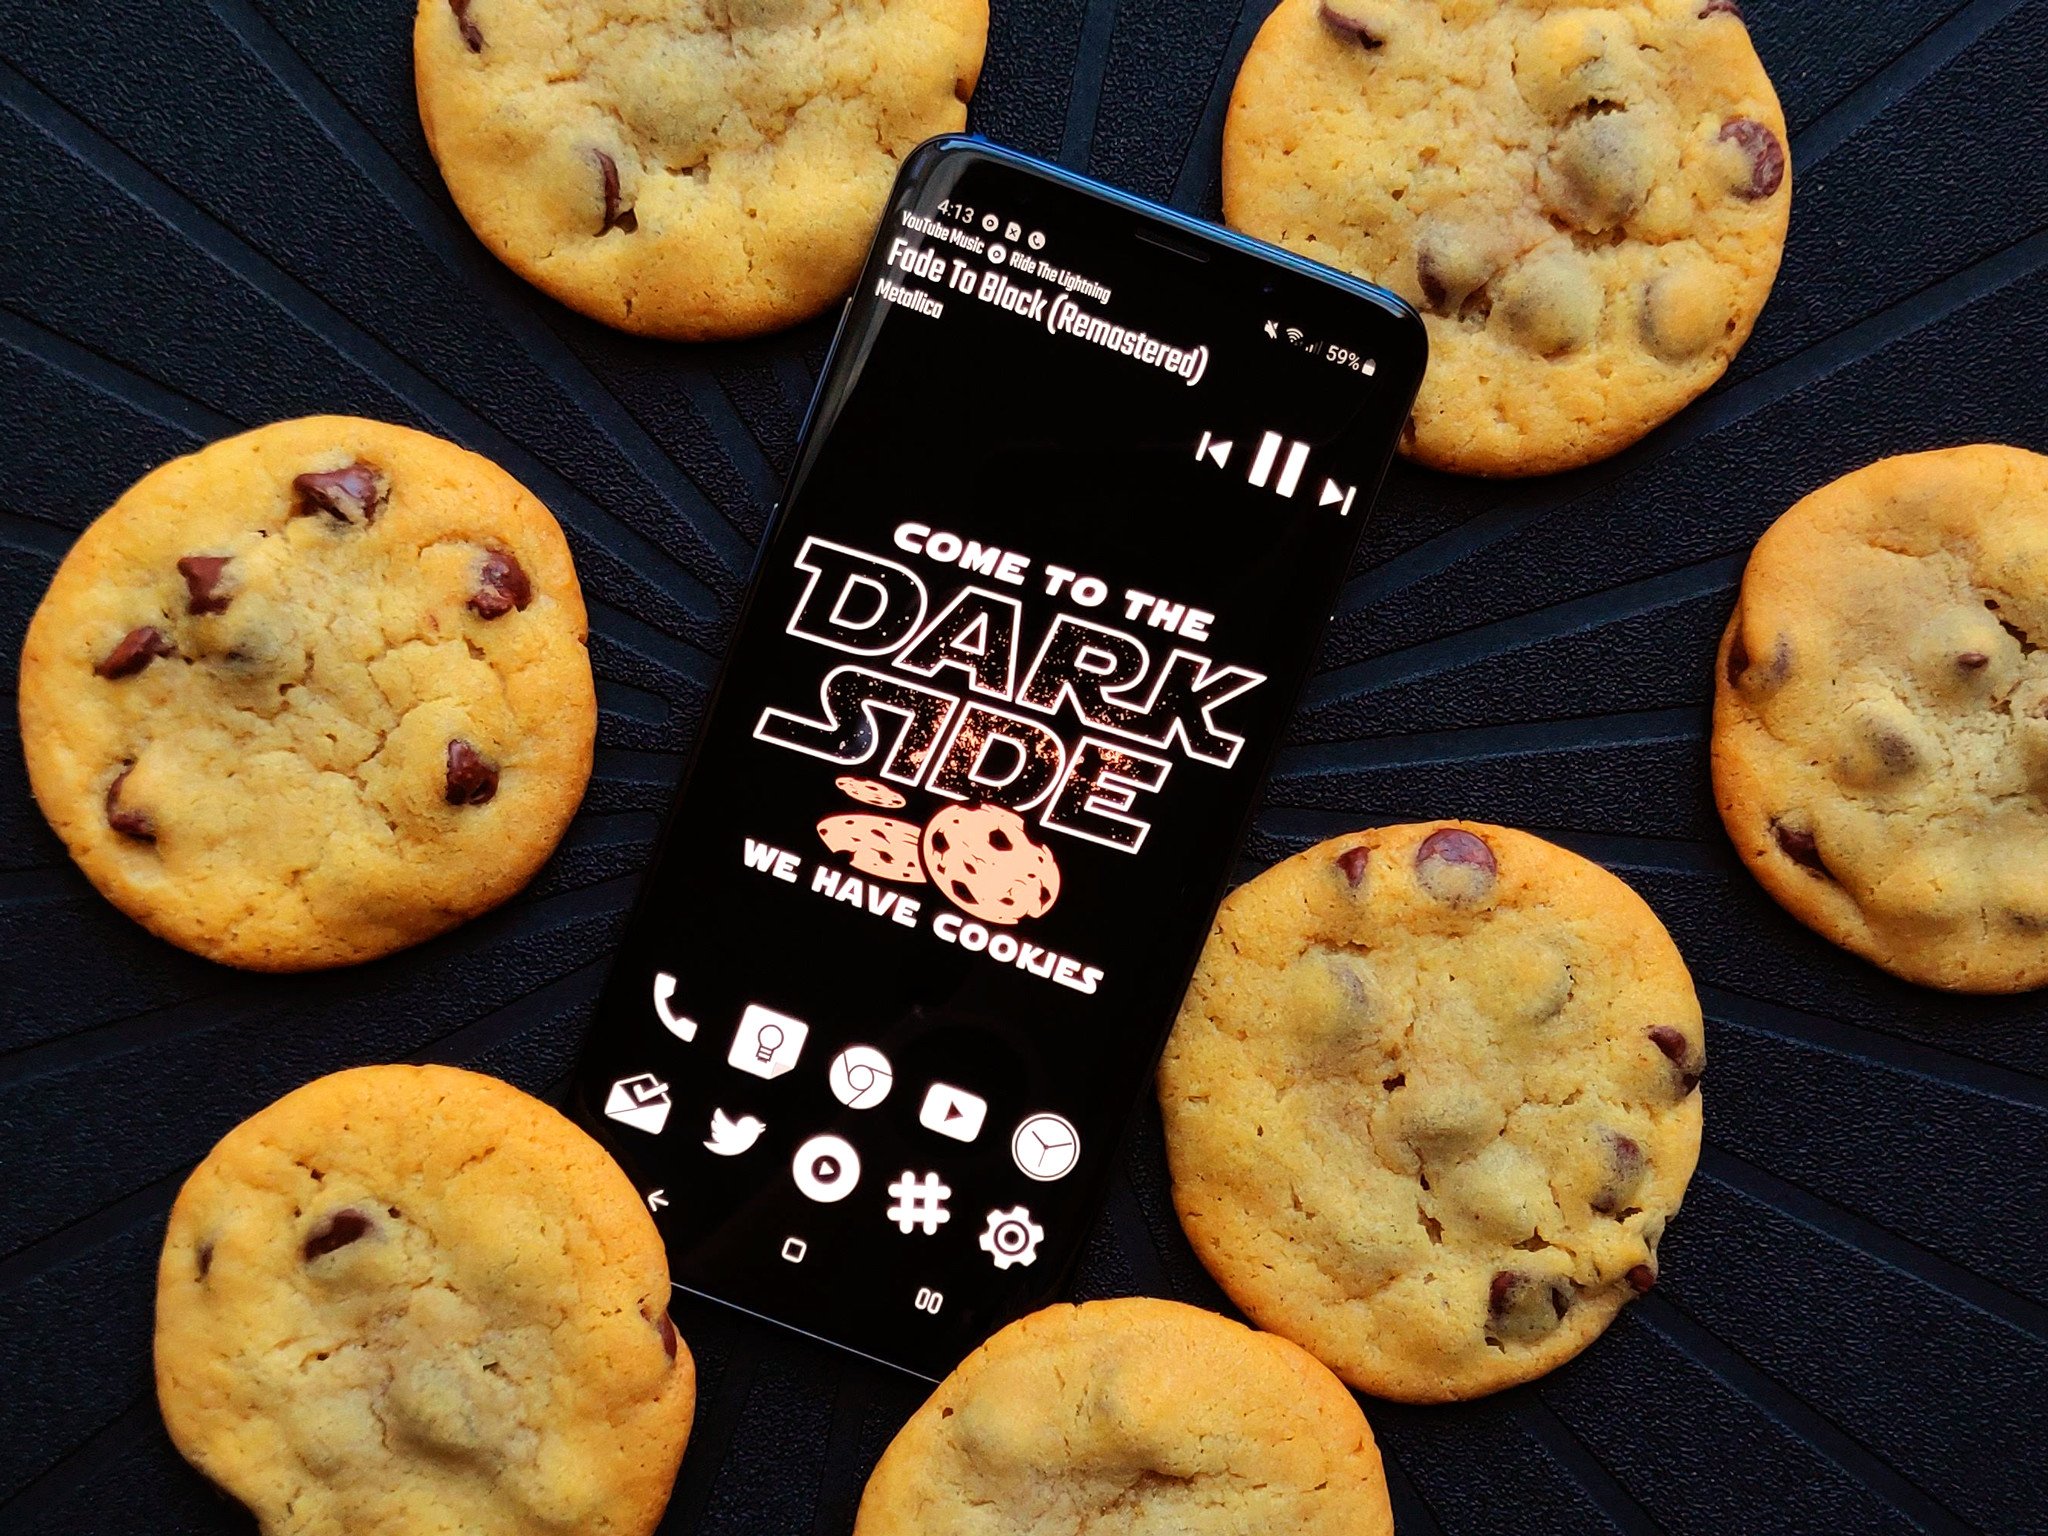 dark-side-cookies-theme-galaxy-s9plus-blackmat-l8pn.jpg